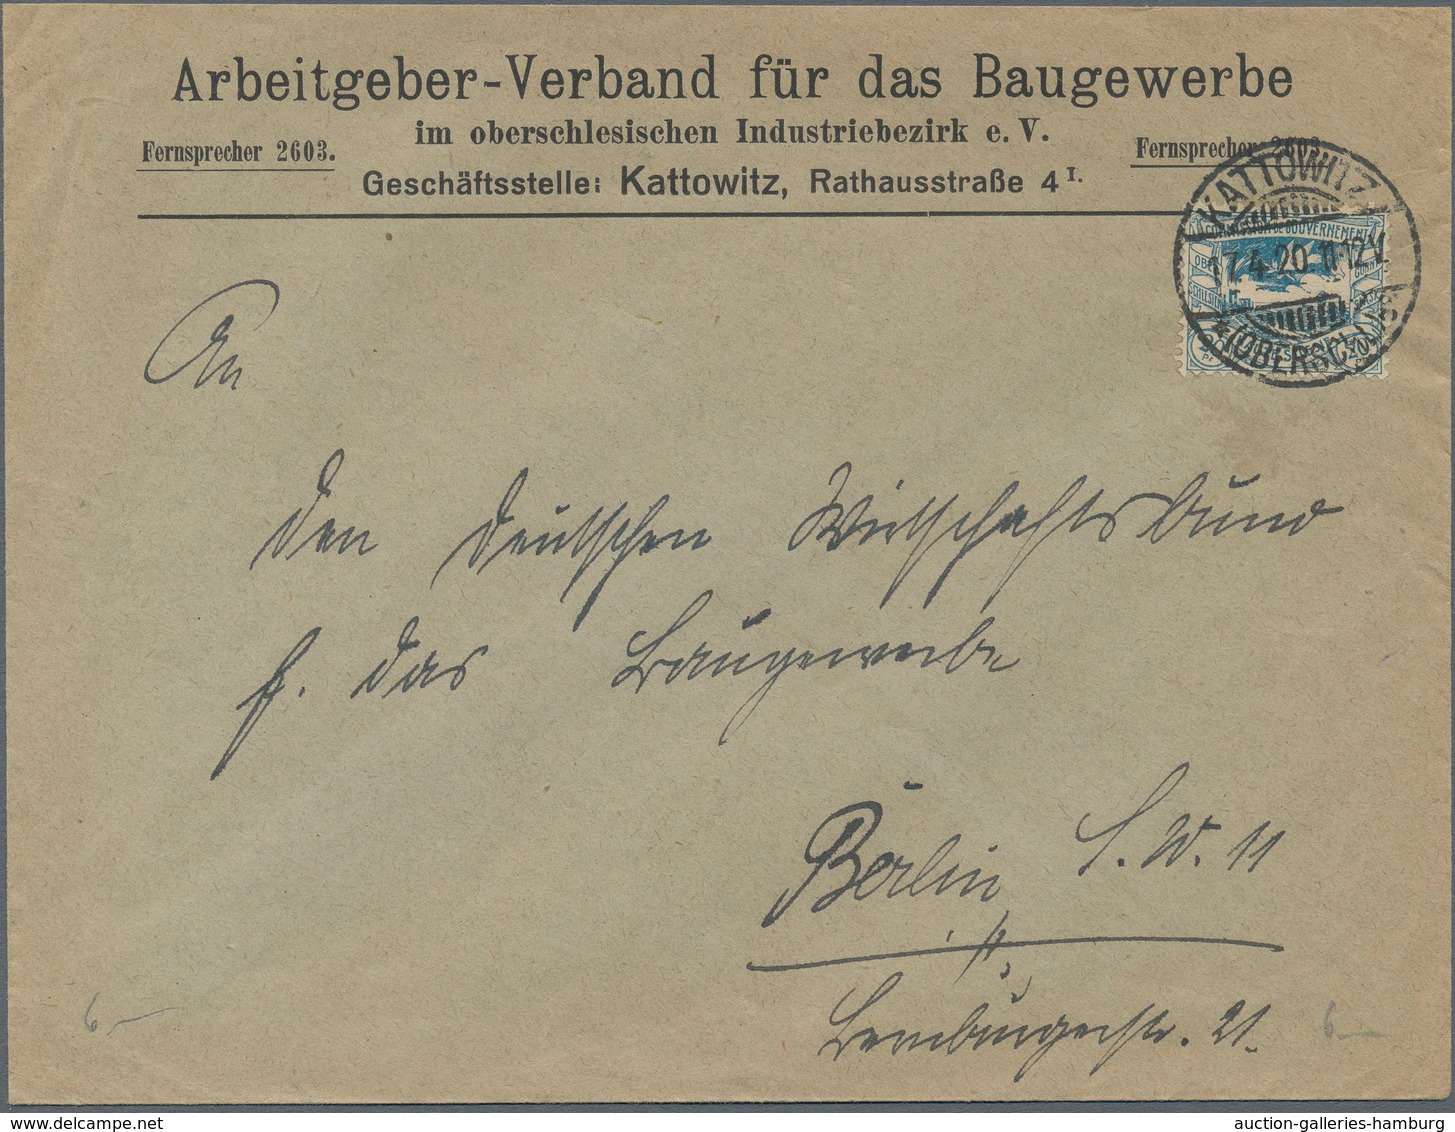 Deutsche Abstimmungsgebiete: Oberschlesien: 1920/1922, neun Bedarfsbelege mit versch. Frankaturen: f